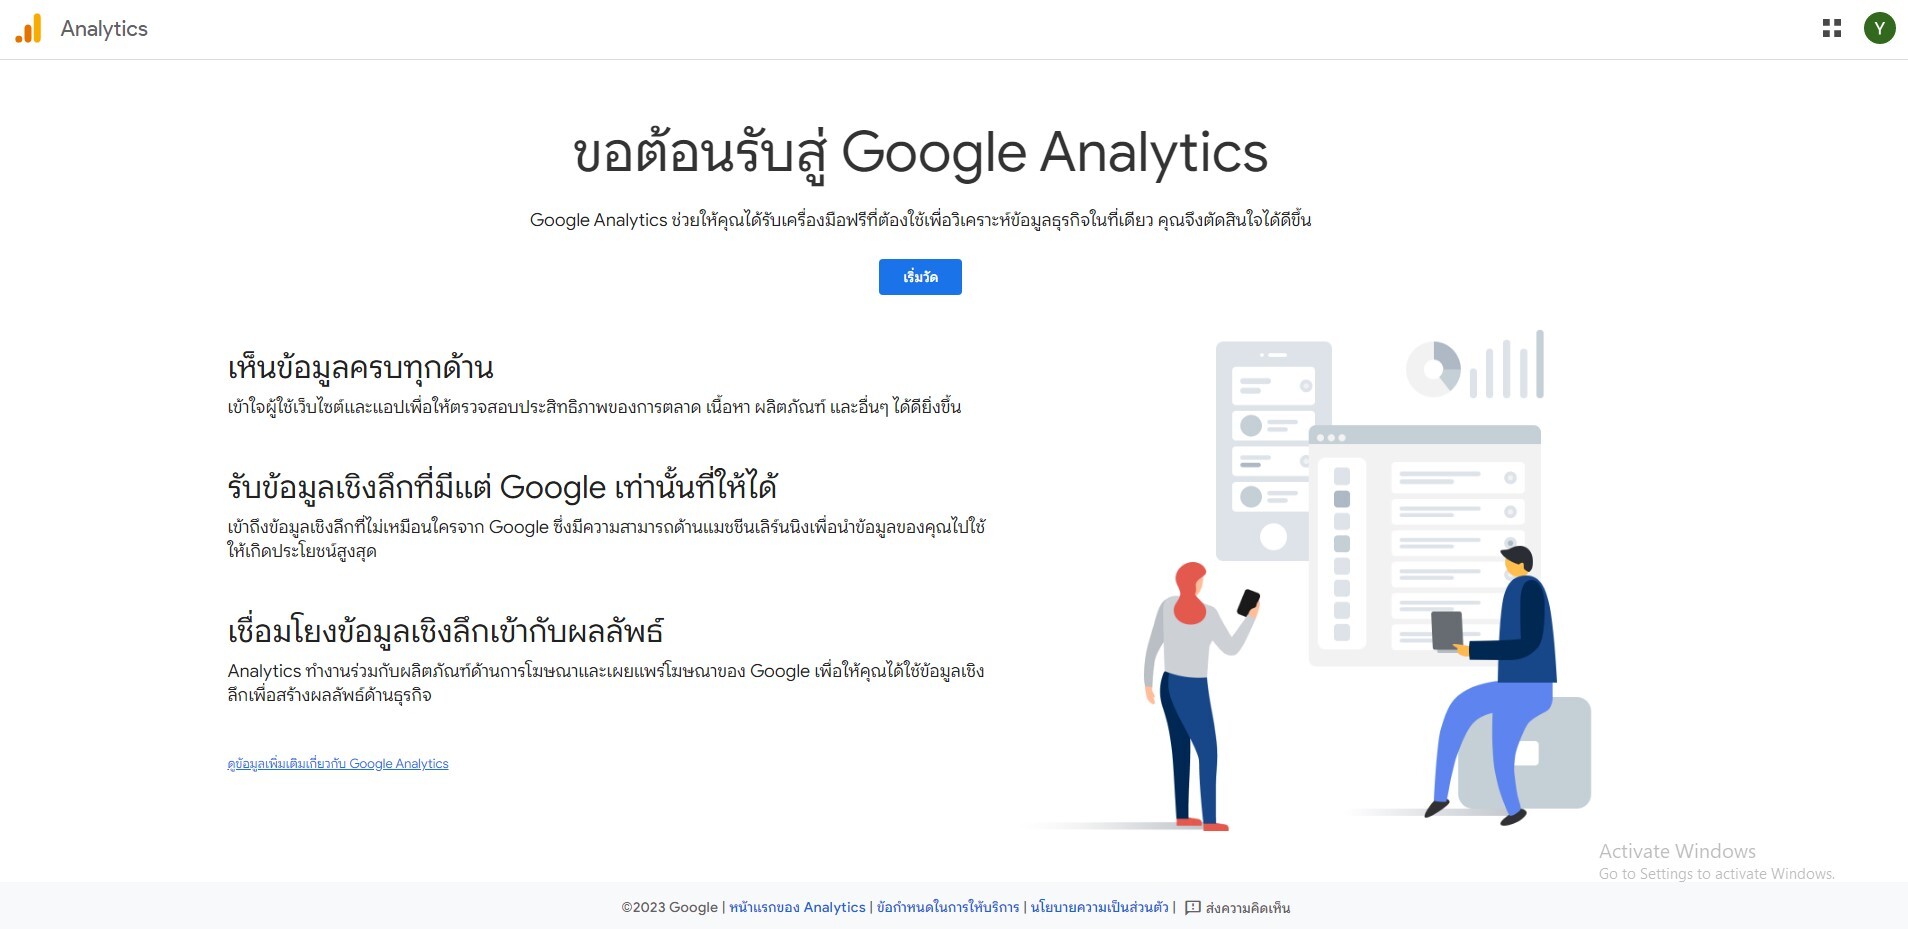 Google Analytic สามารถใช้วิเคราะห์และเก็บสถิติต่าง ๆ ของตัวเว็บไซต์ได้